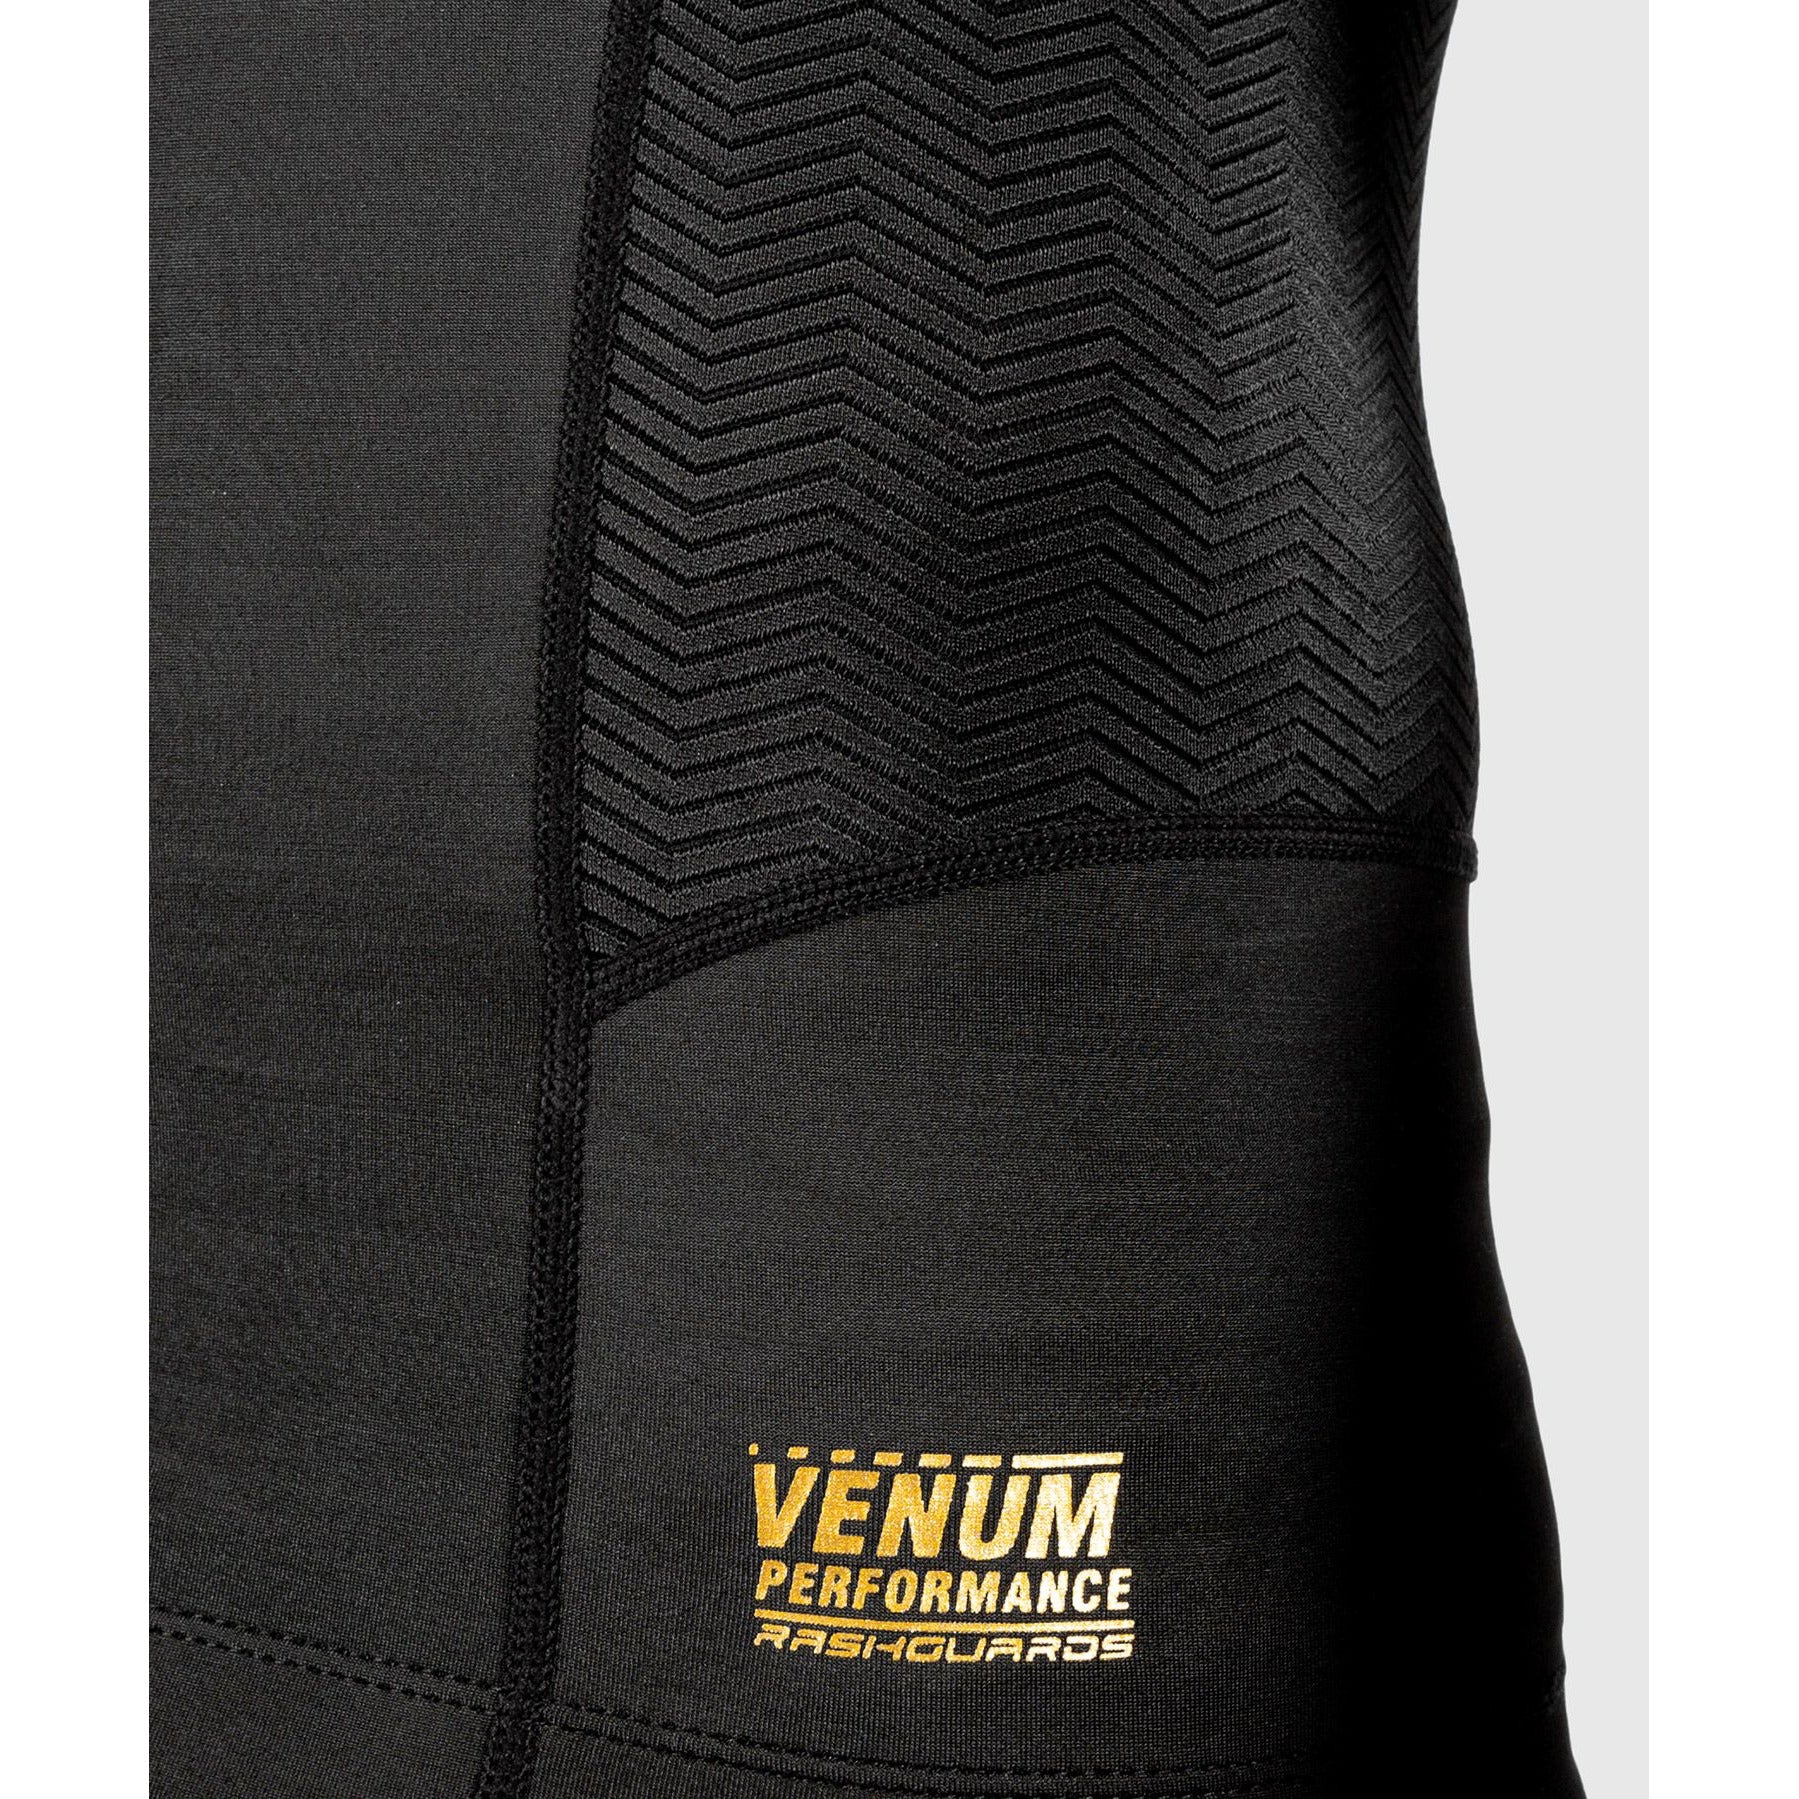 Martial Arts Supplies Aus for Venum